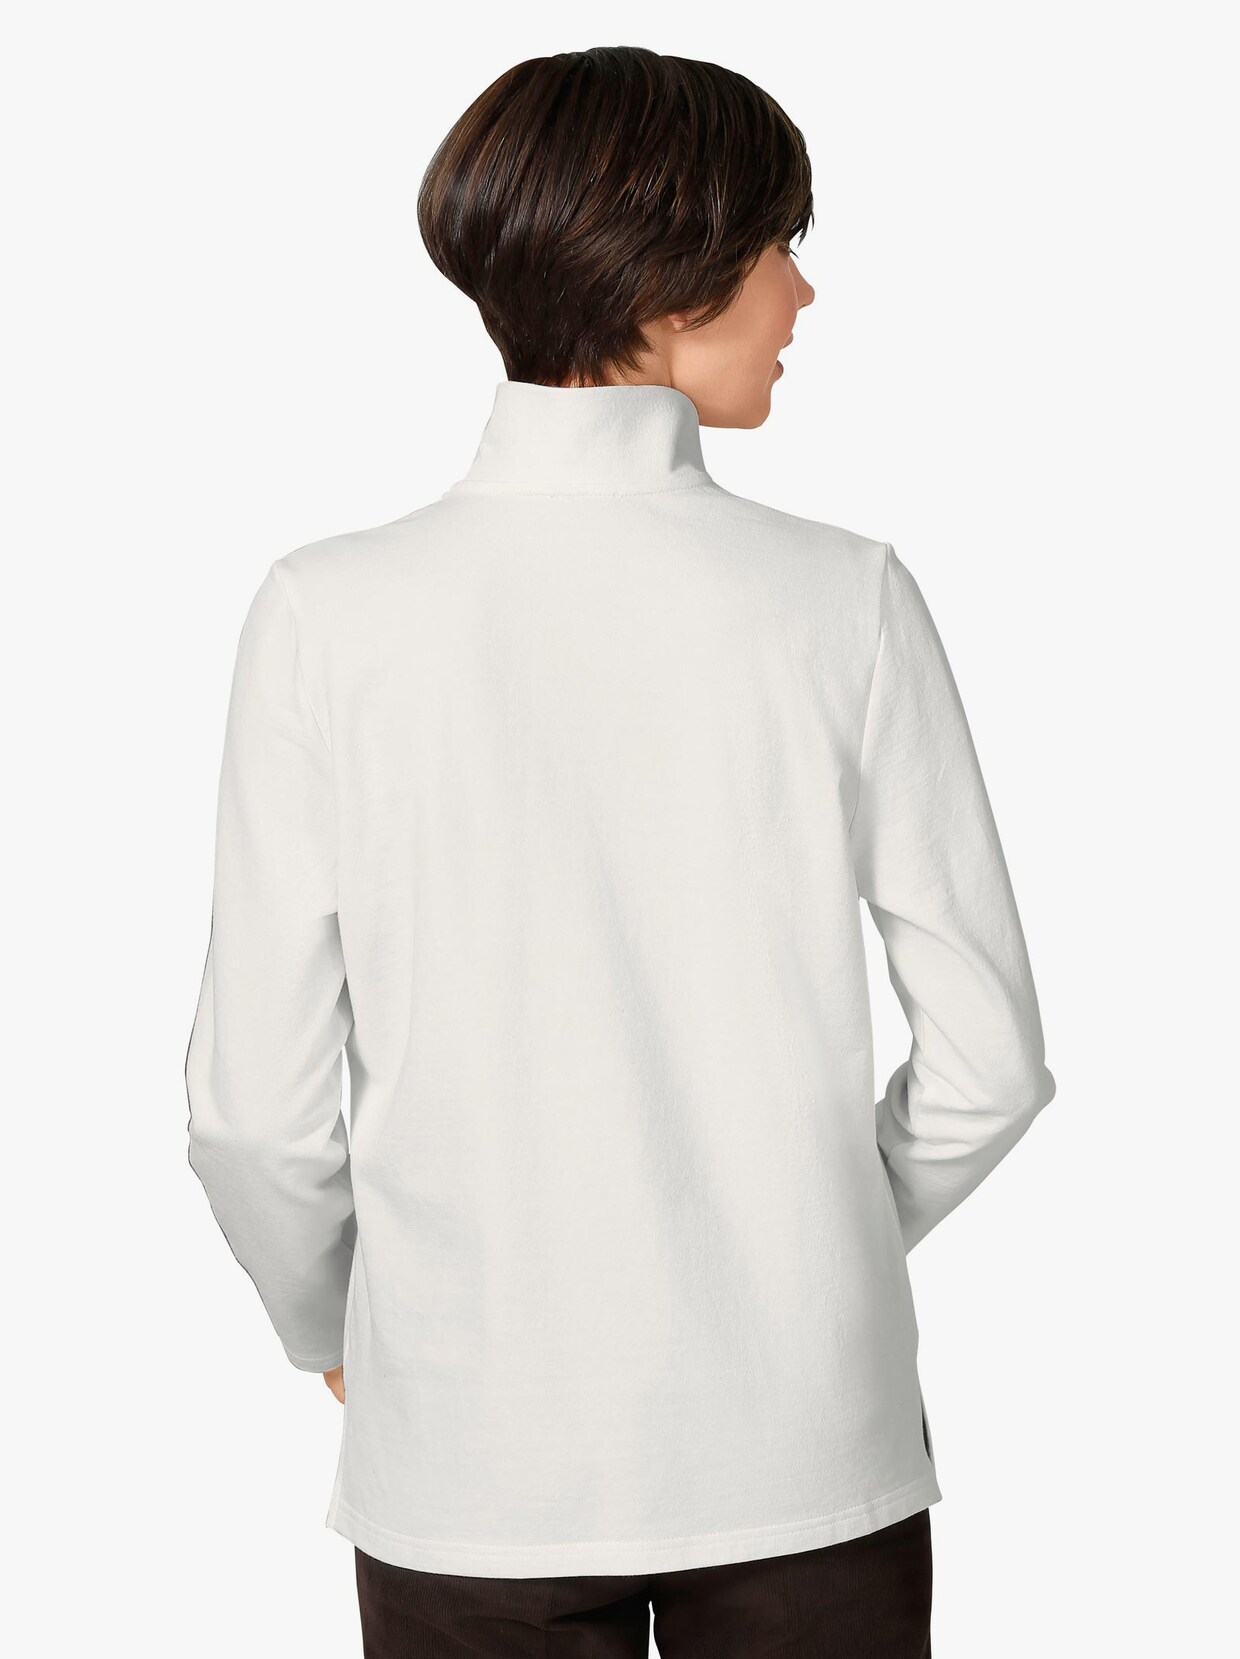 Tričko s dlouhým rukávem - vlněná bílá-vzor